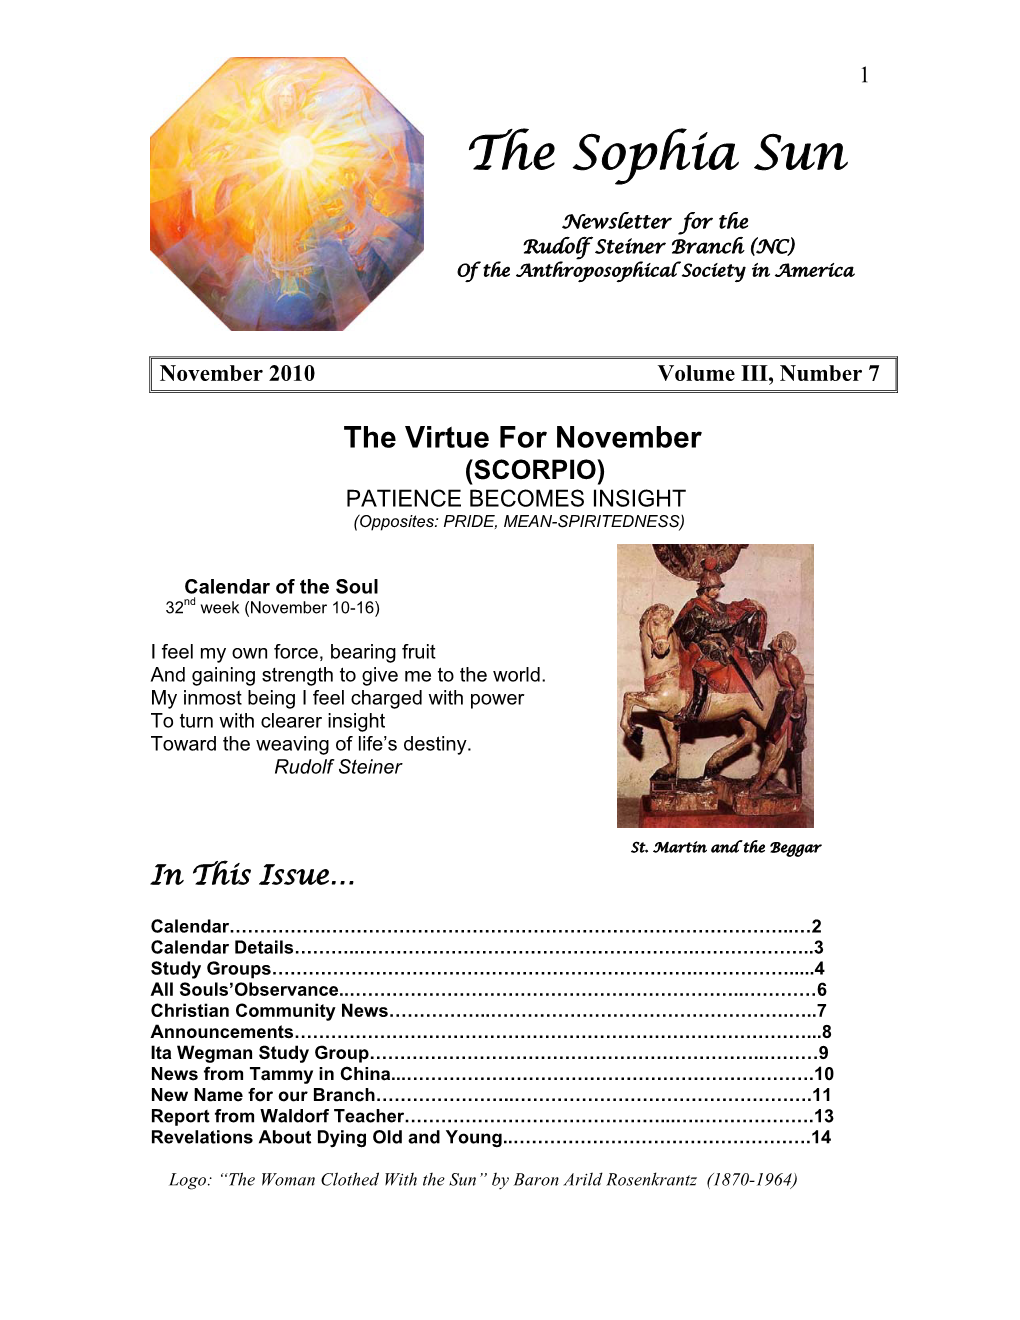 The Sophia Sun